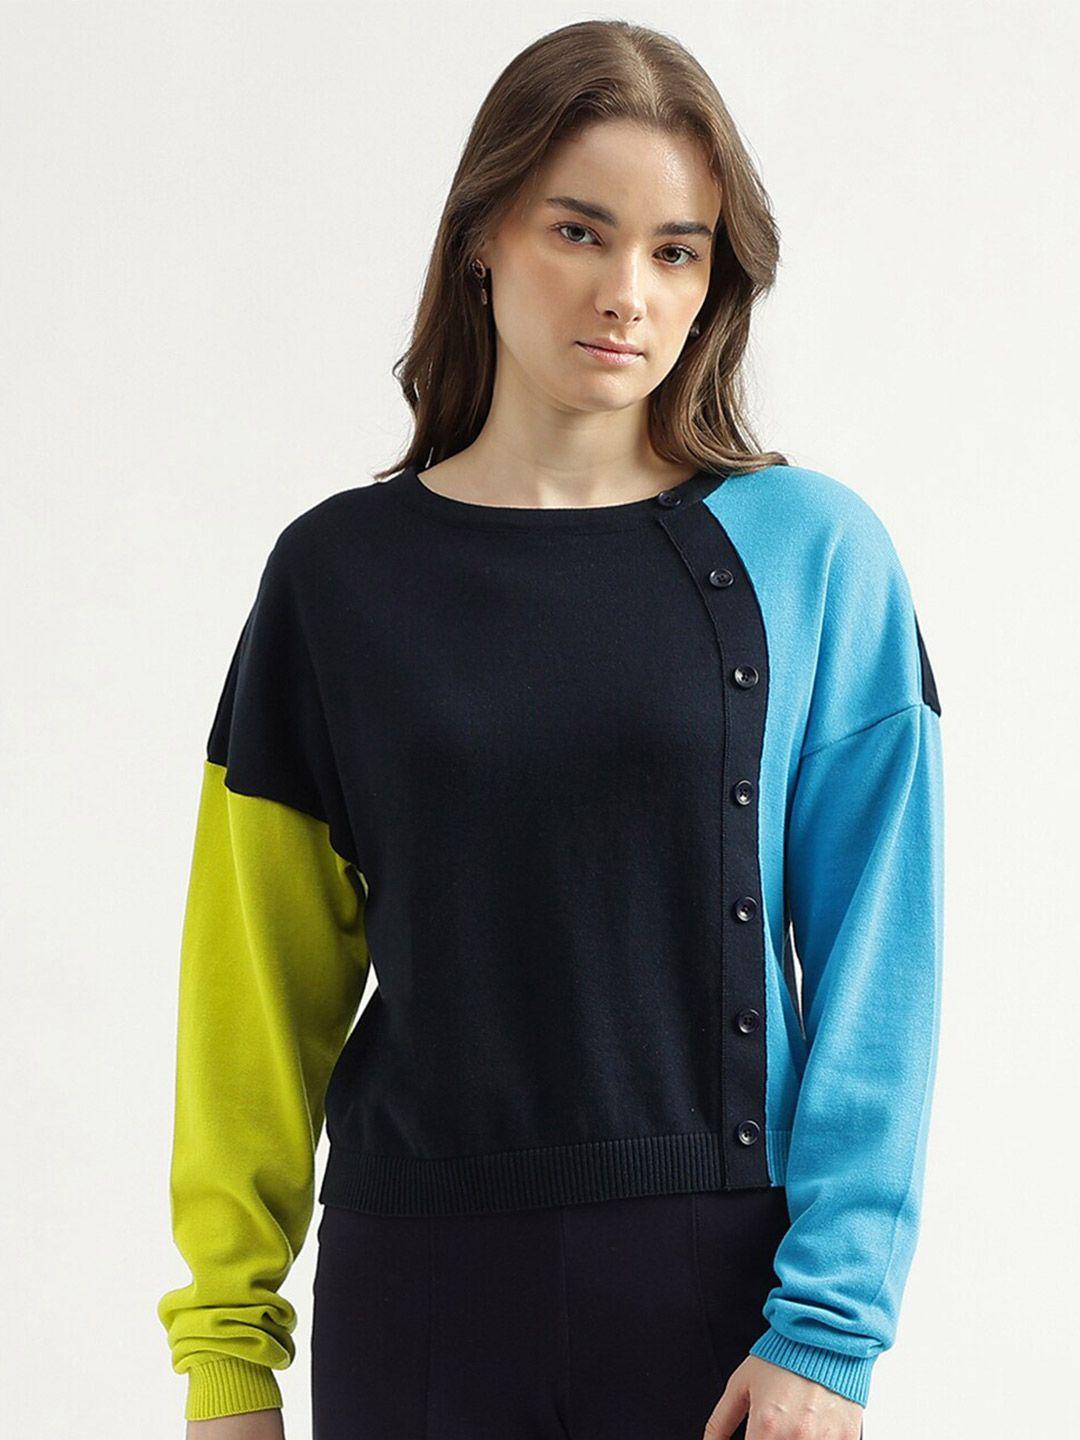 united-colors-of-benetton-colourblocked-cotton-pullover